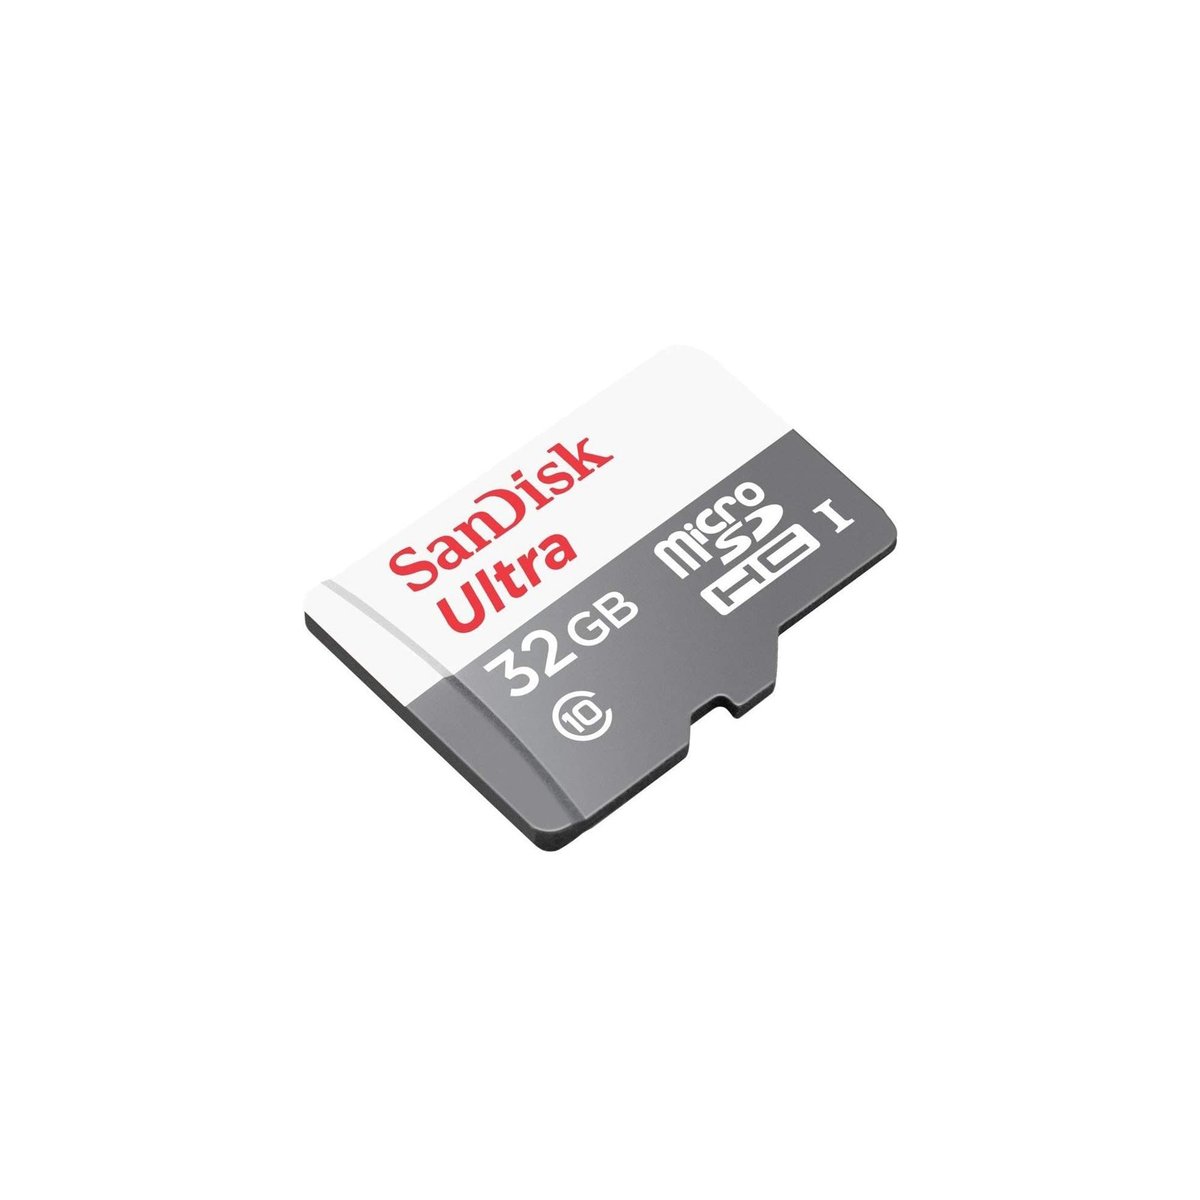 SanDisk Ultra microSDXC Card SDSQUNR 32GB